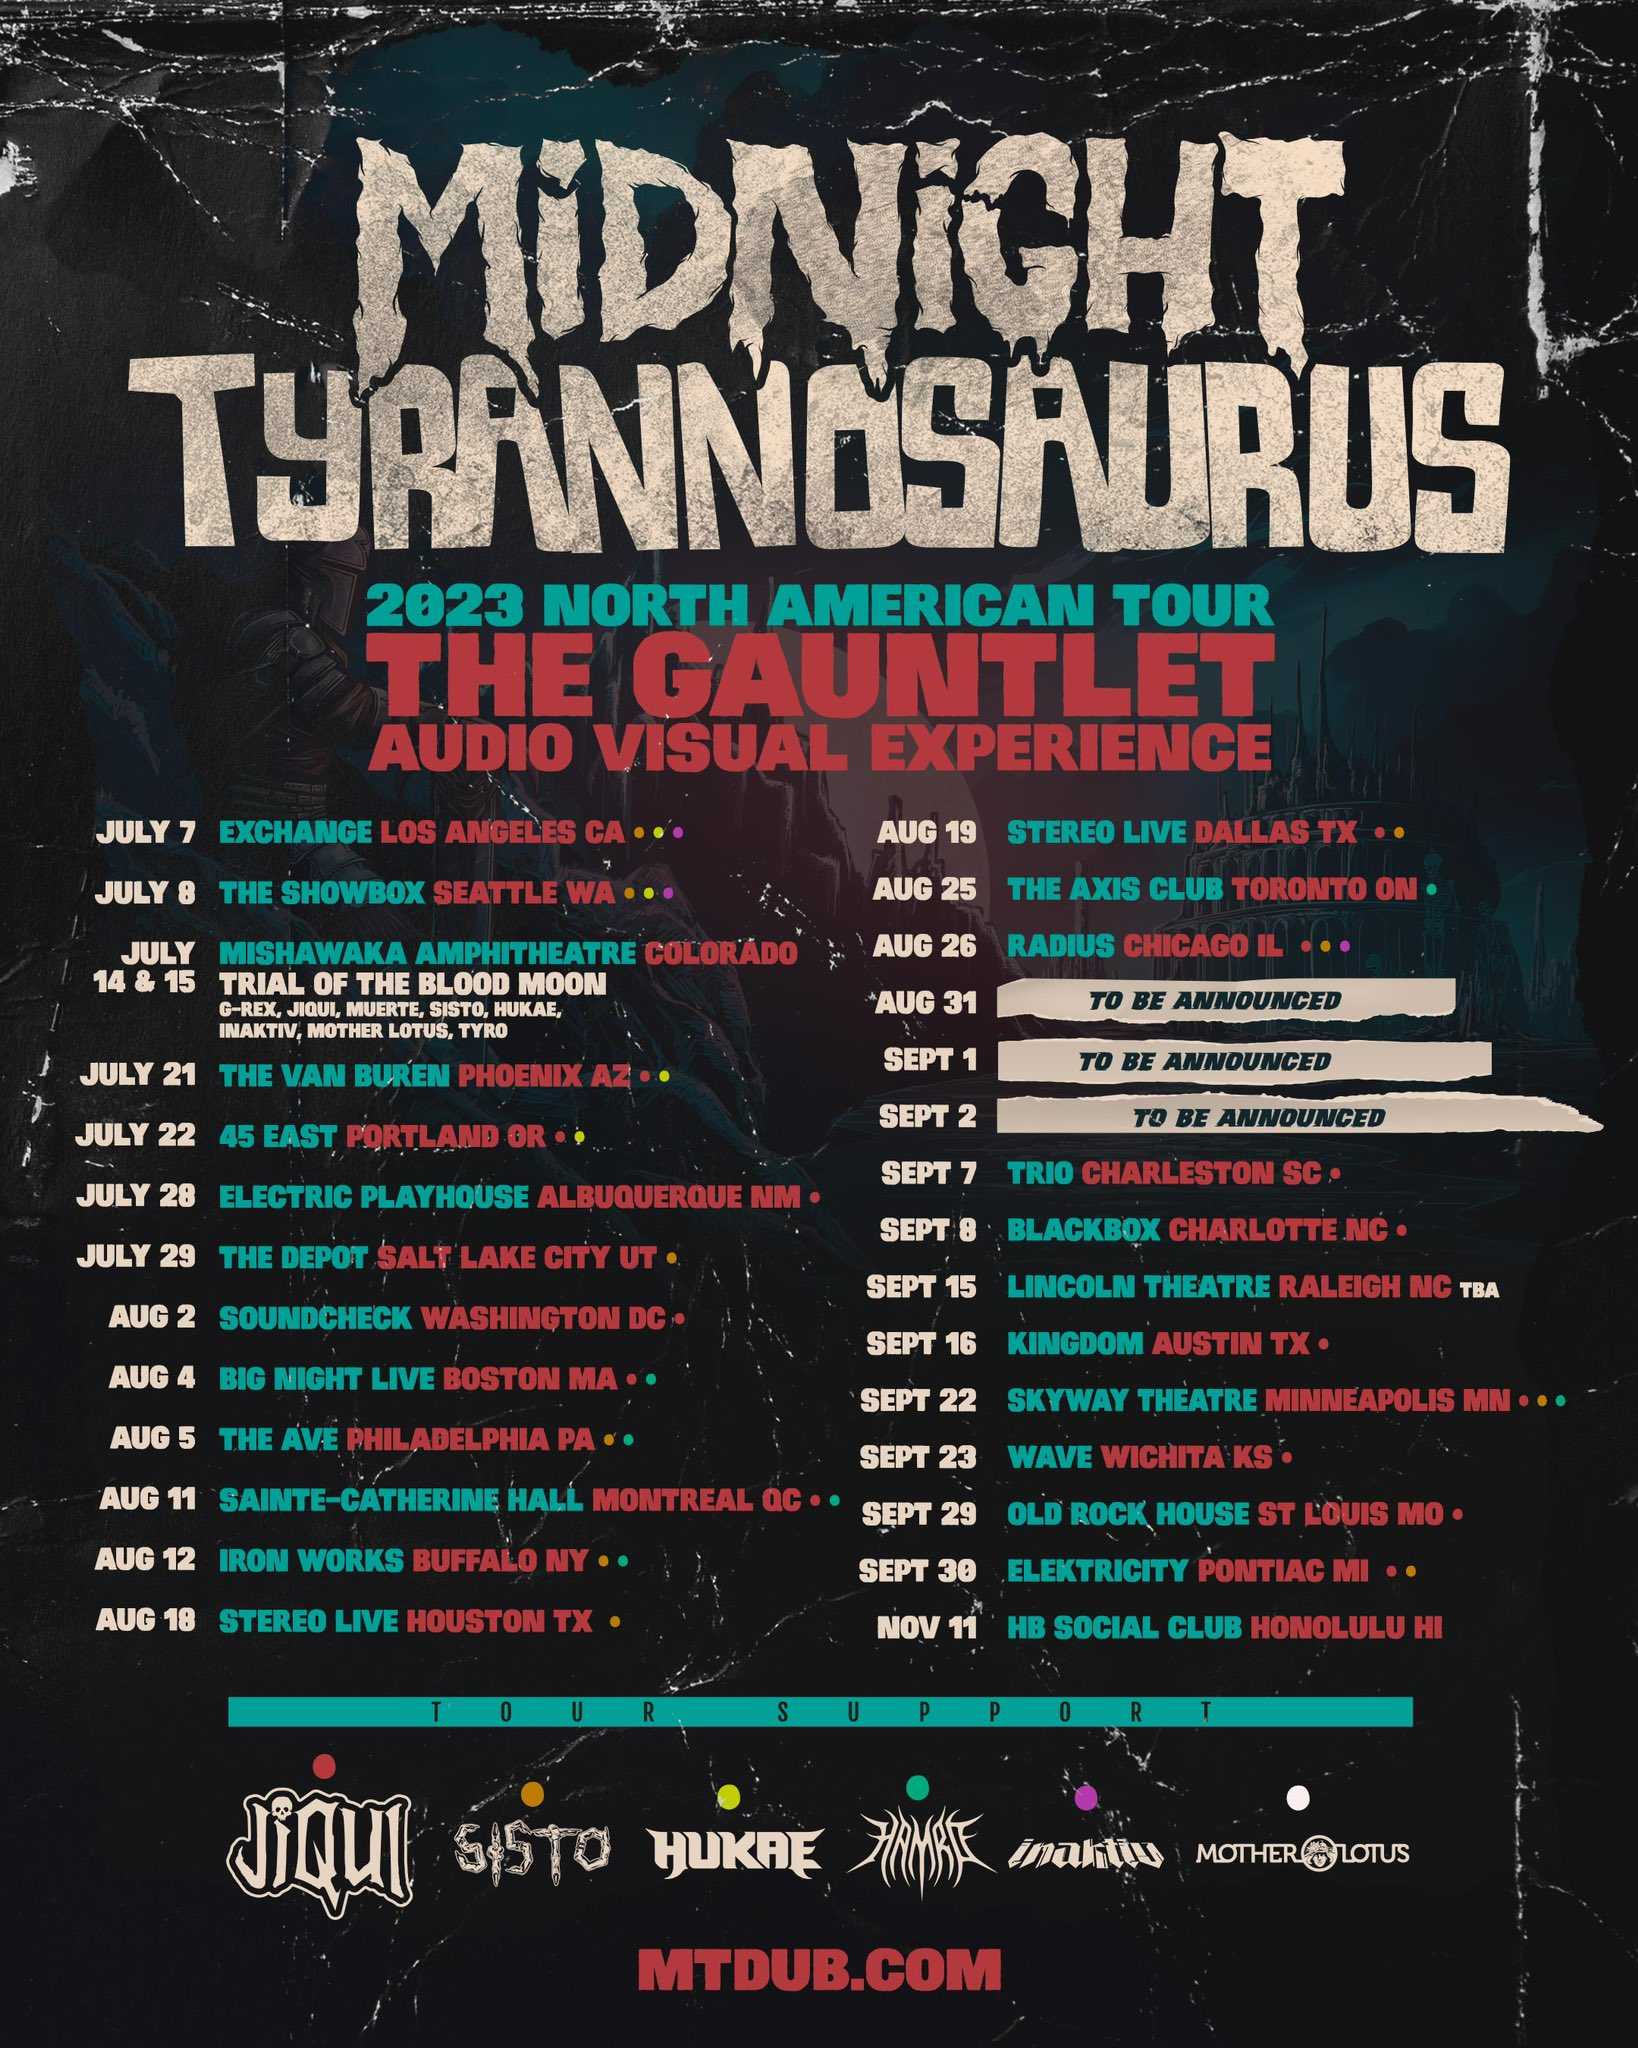 midnight-tyrannosaurus-the-gauntlet-tour-the-axis-club-2023-08-25-toronto